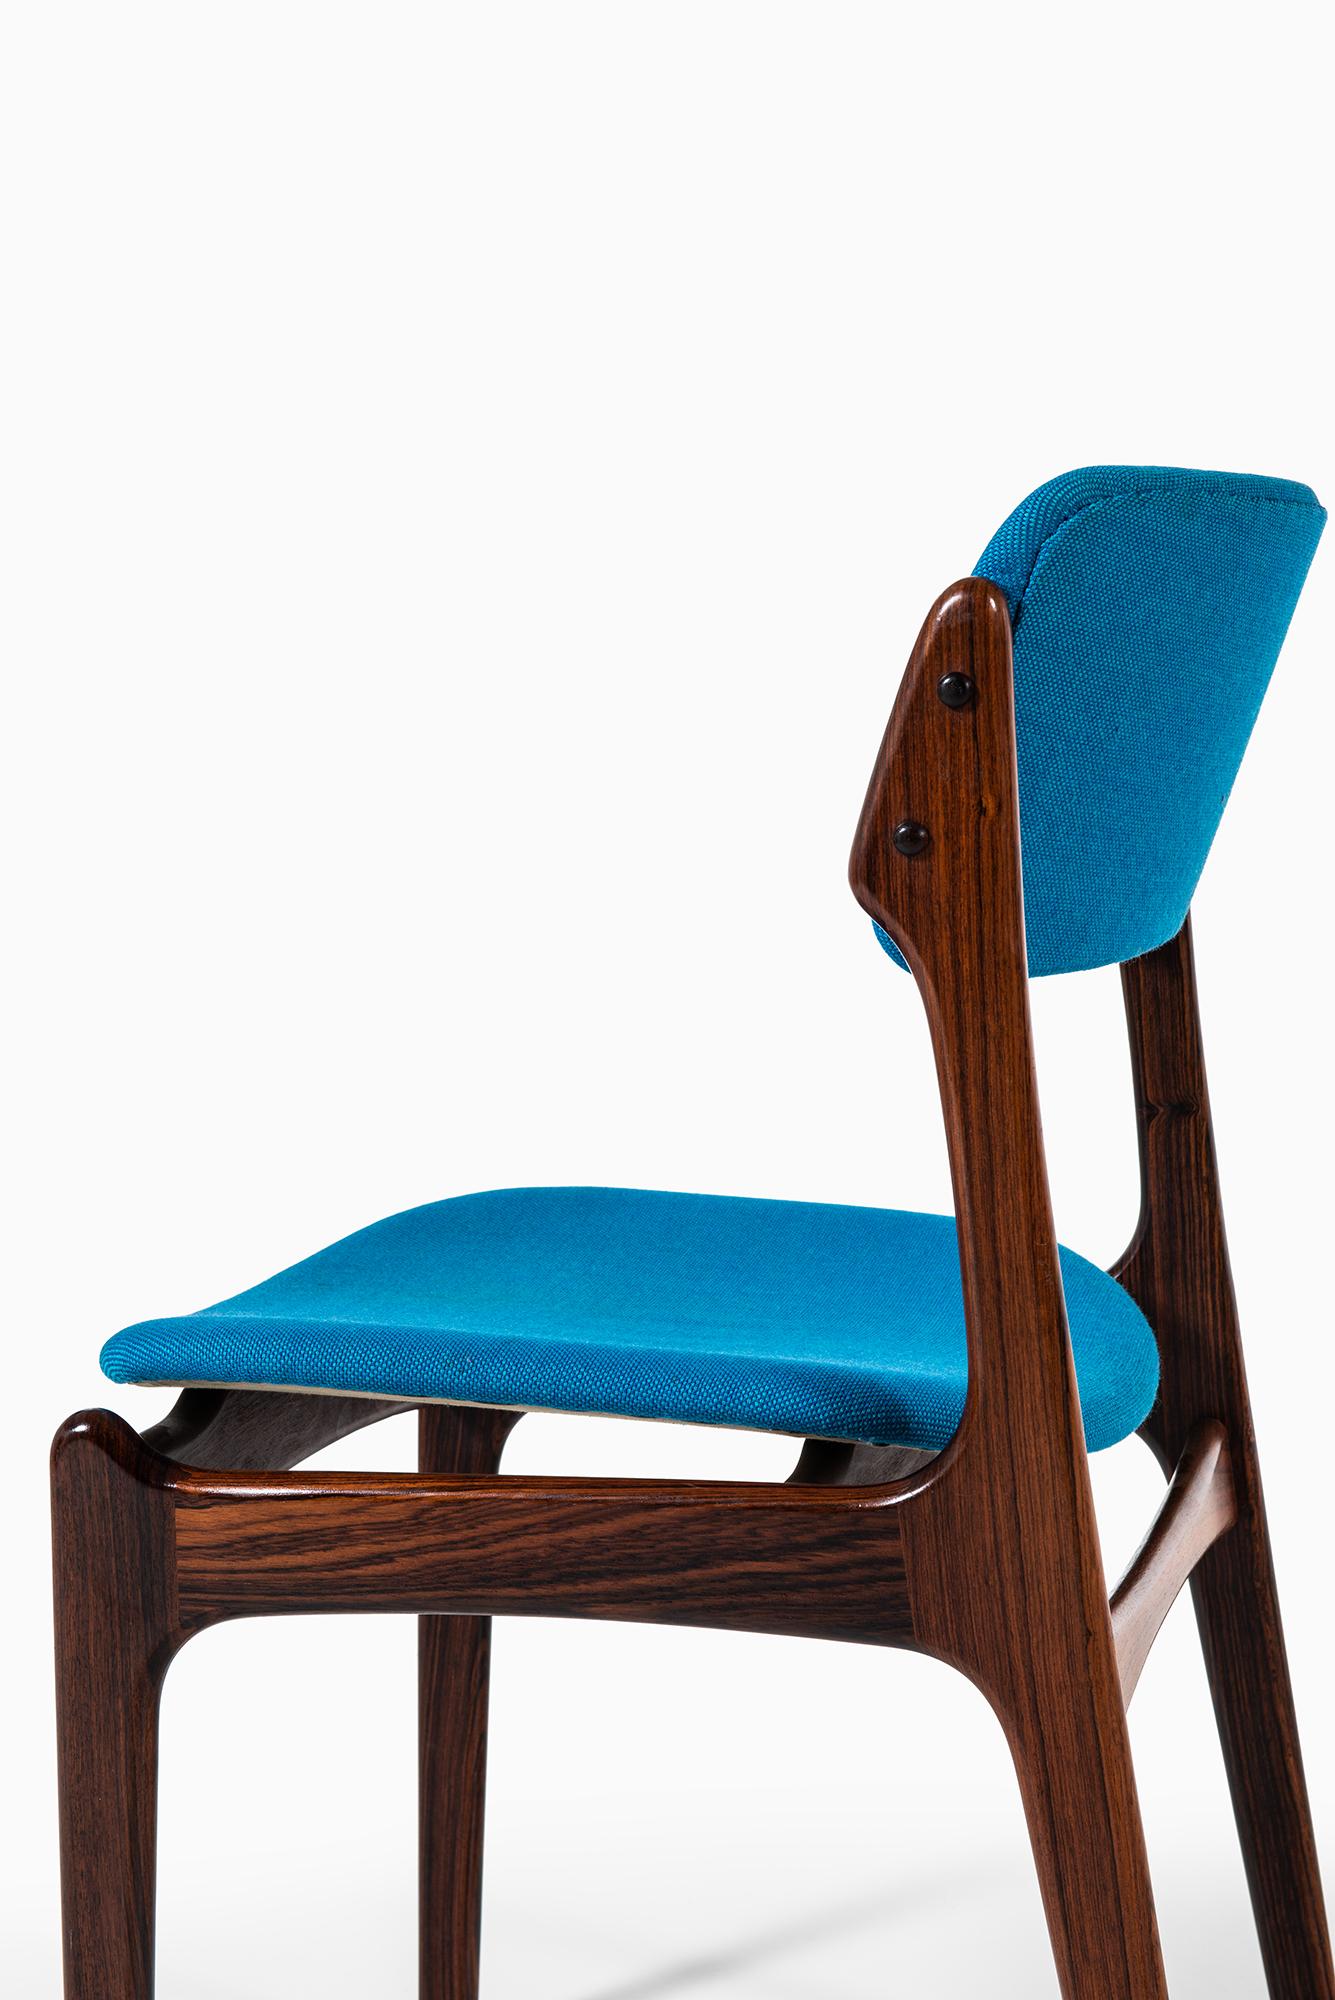 Mid-20th Century Erik Buch Dining Chairs Model OD-49 by Oddense Maskinsnedkeri in Denmark For Sale